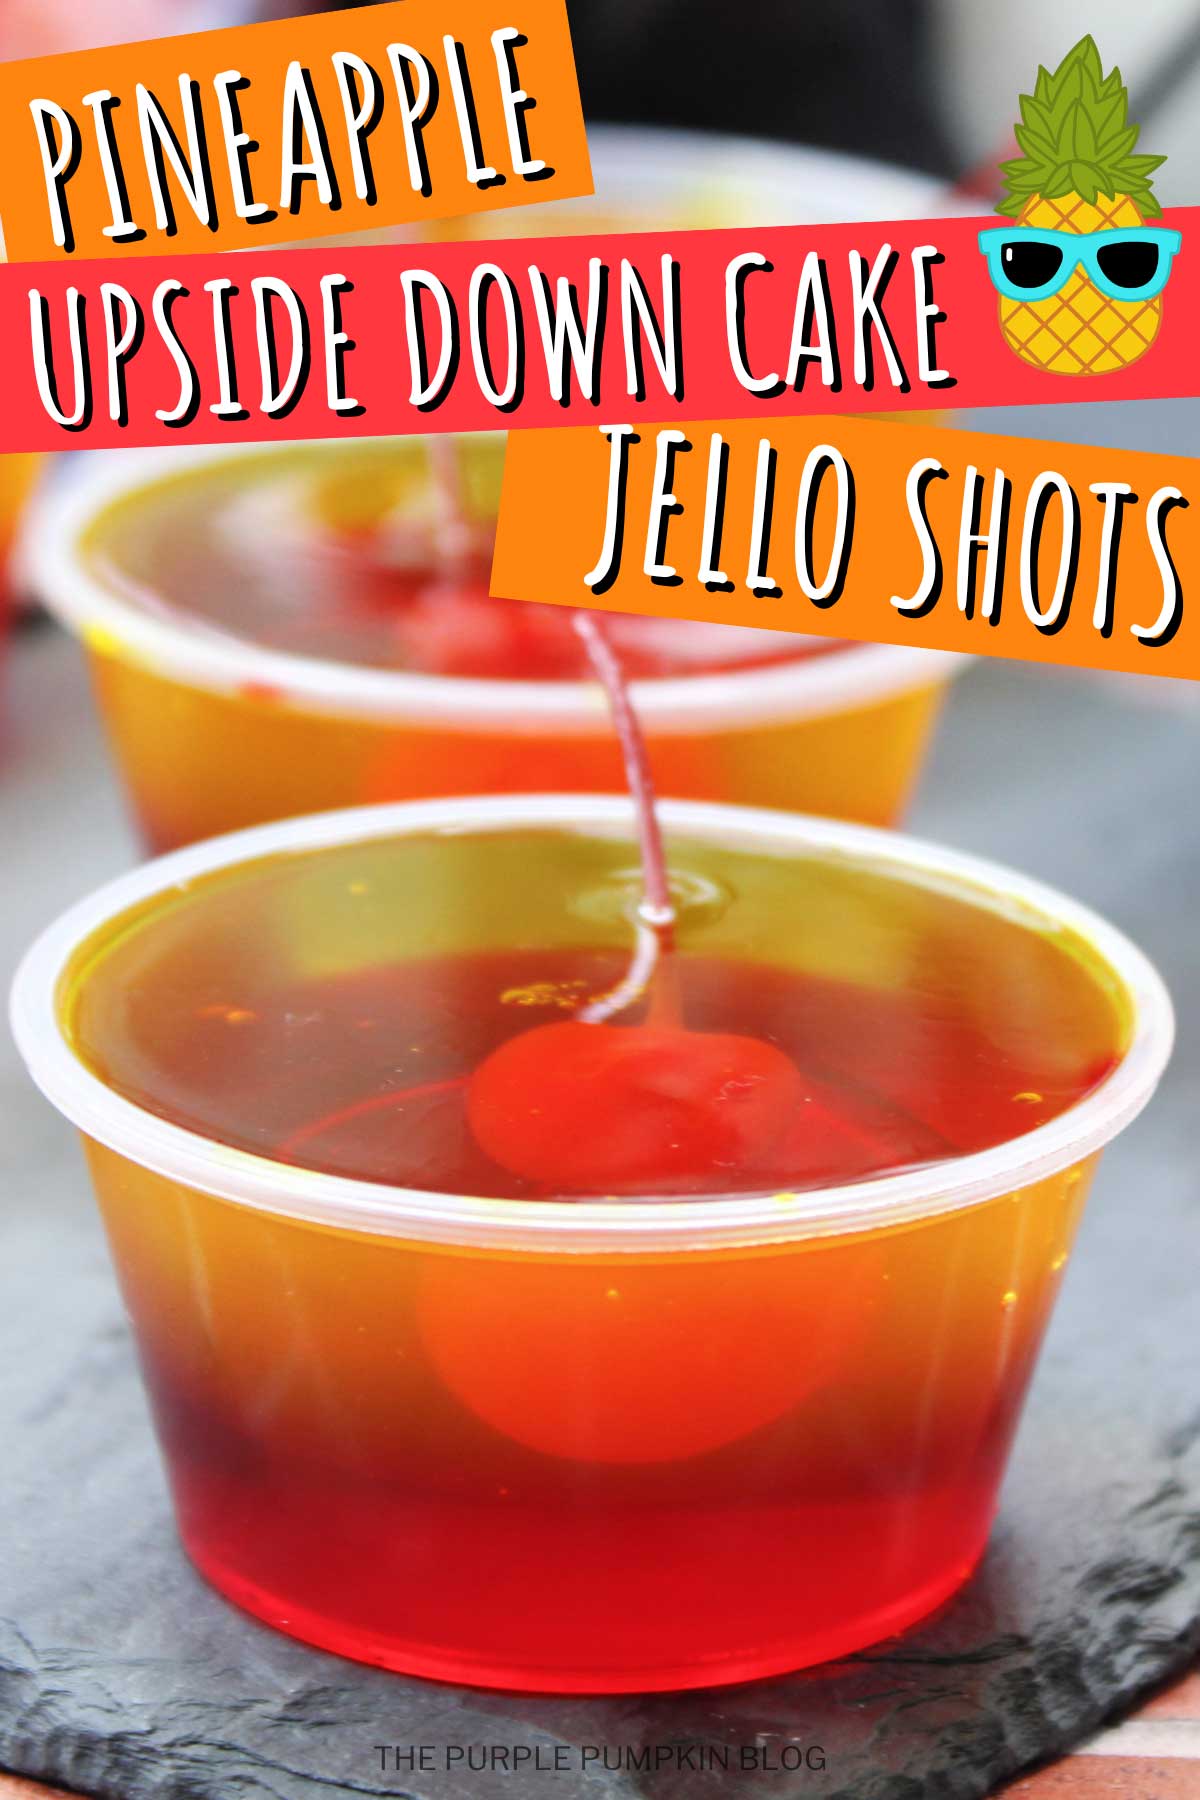 Pineapple-Upside-Down-Cake-Jello-Shots